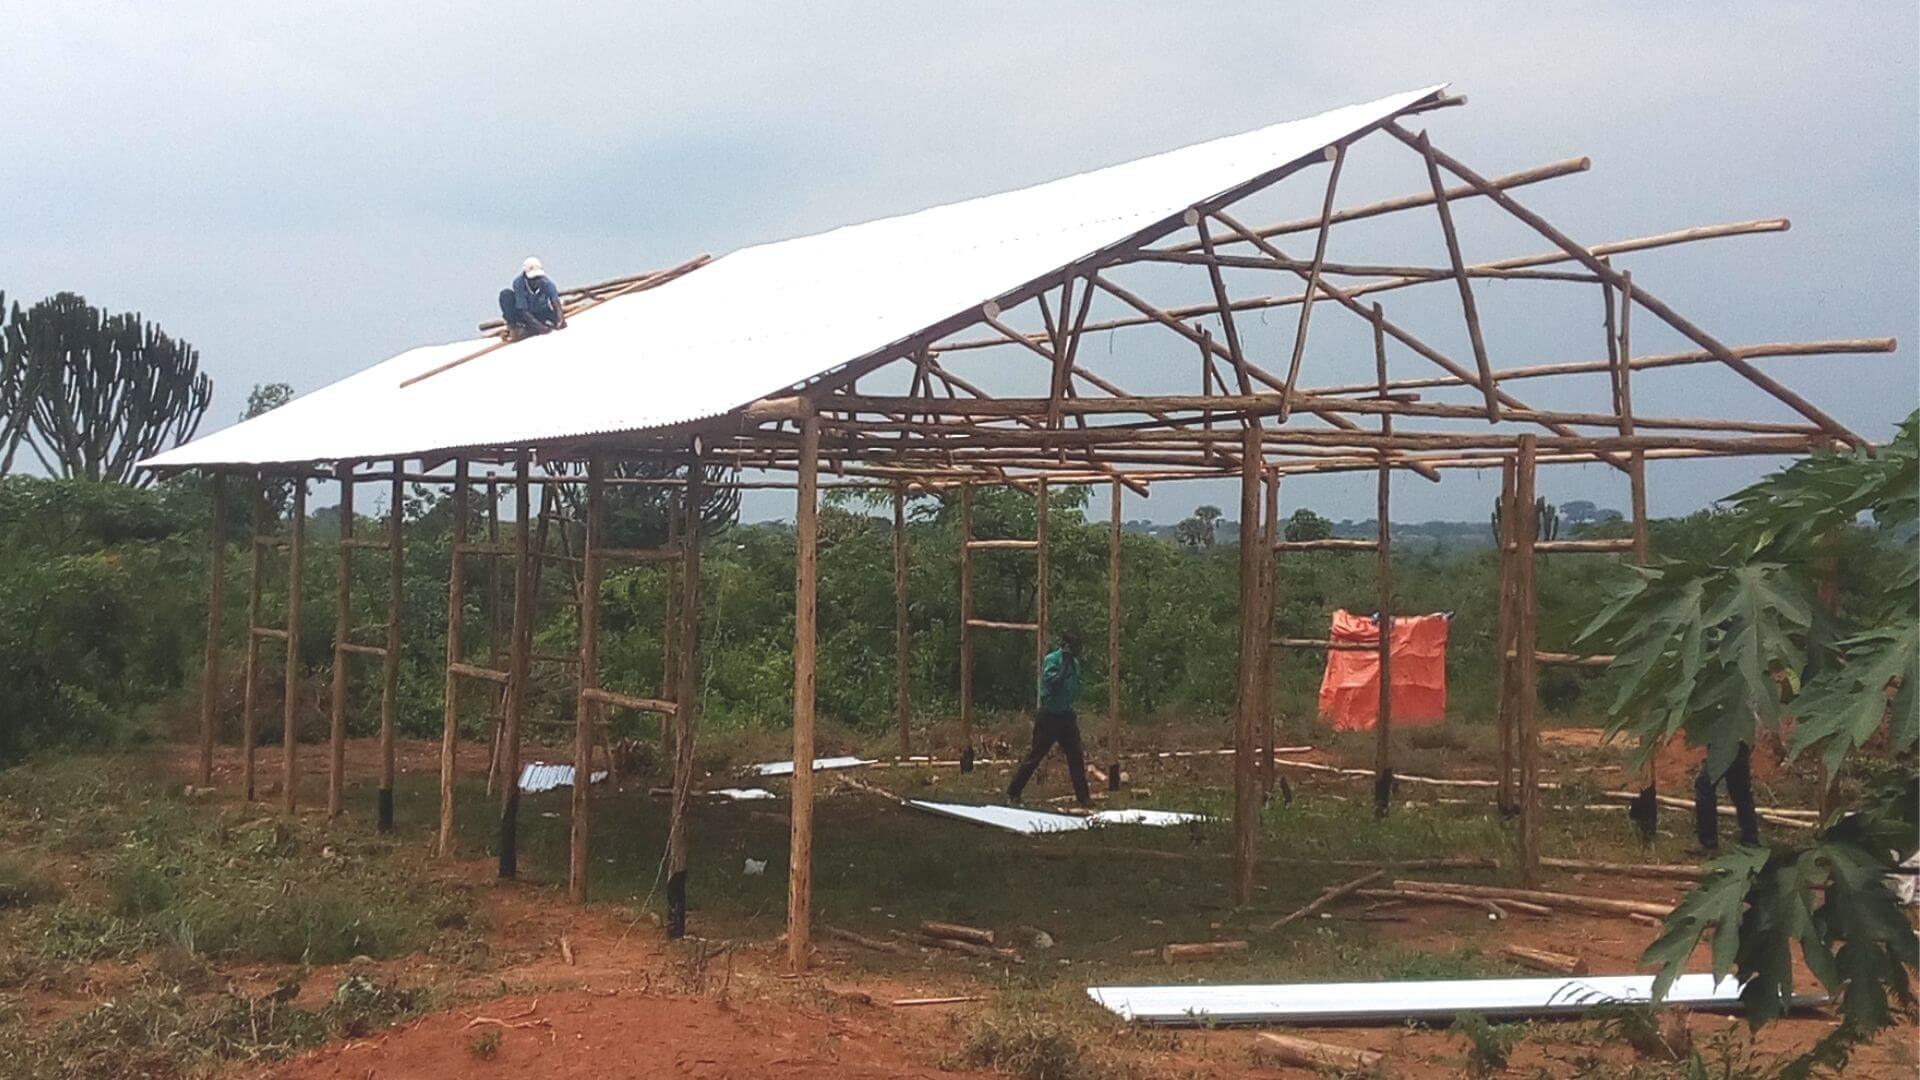 Emergency Church Shelters Springing up in Uganda